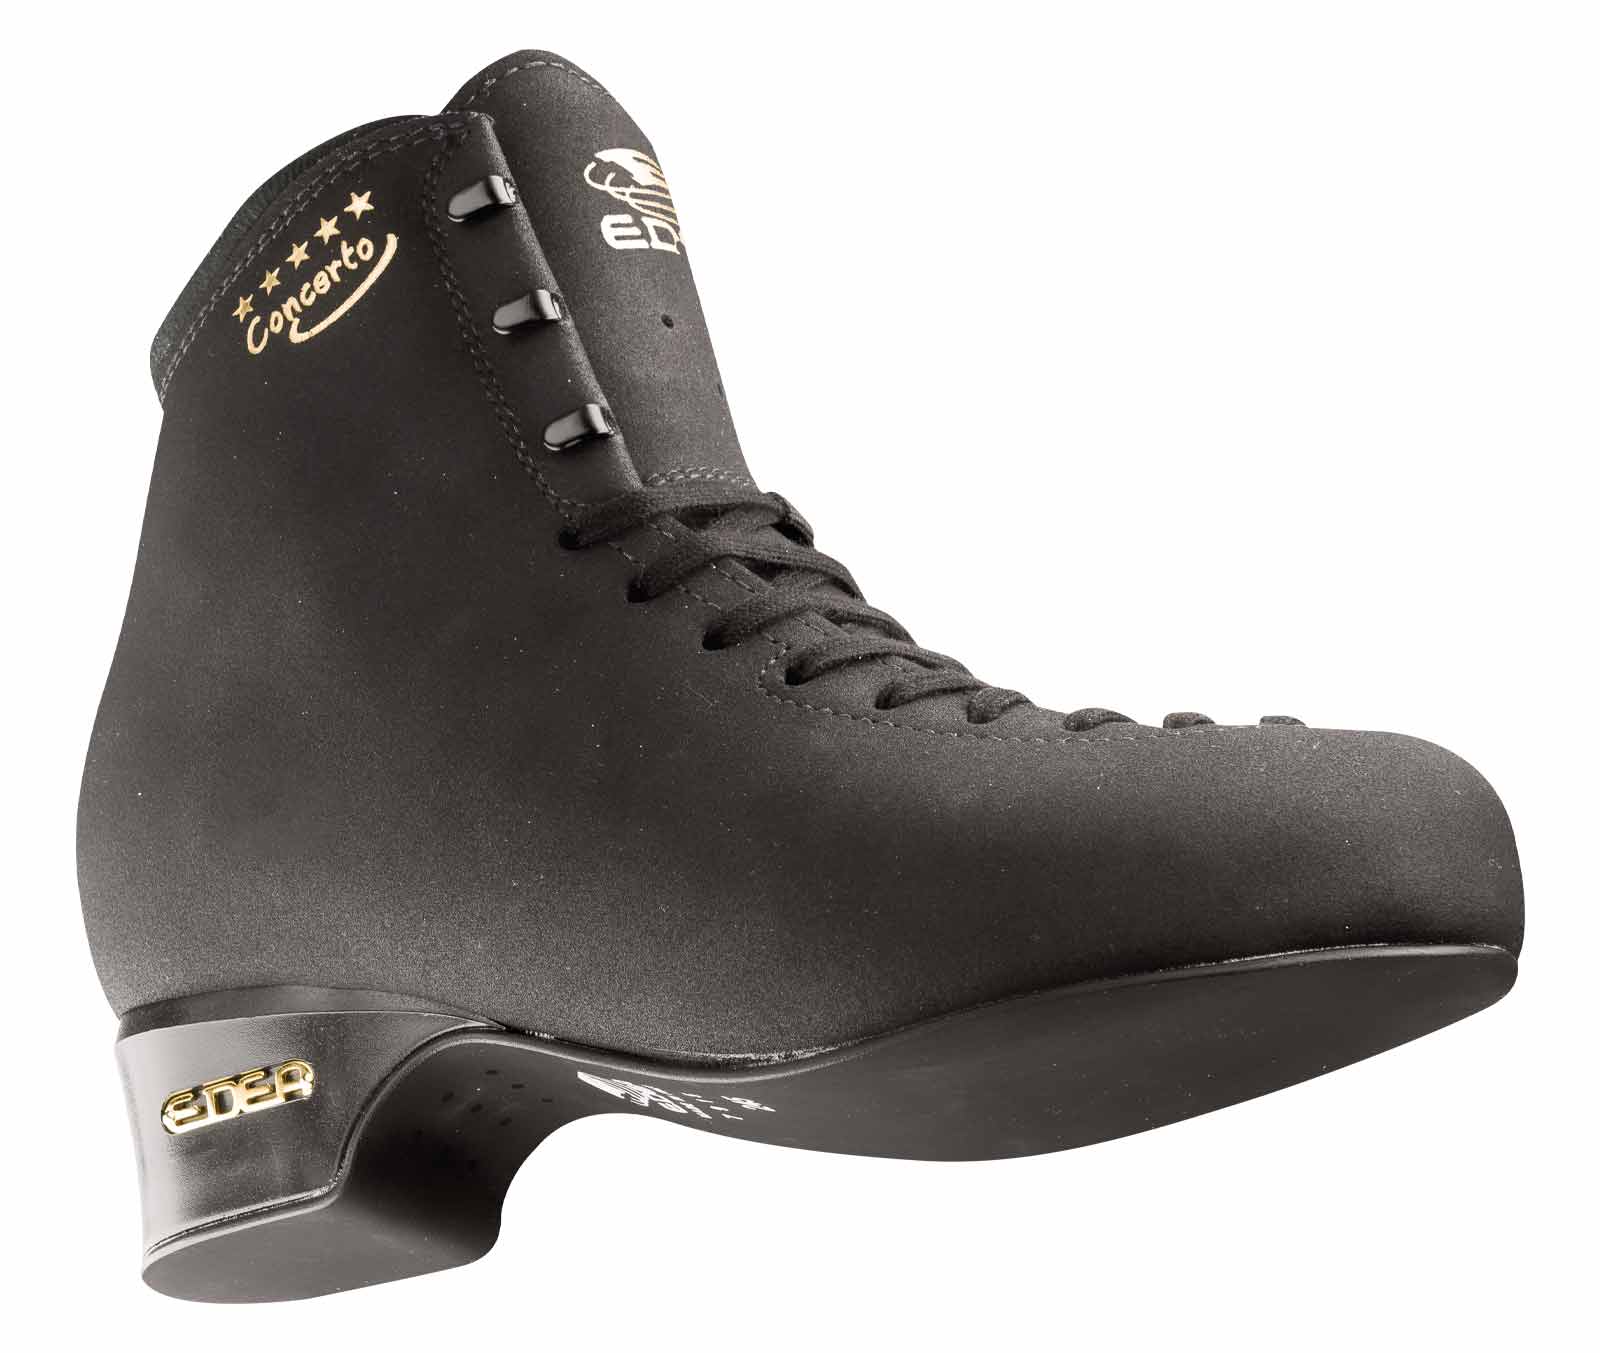 Edea Concerto Boot Only in Black. Senior Sizes 260 - 310